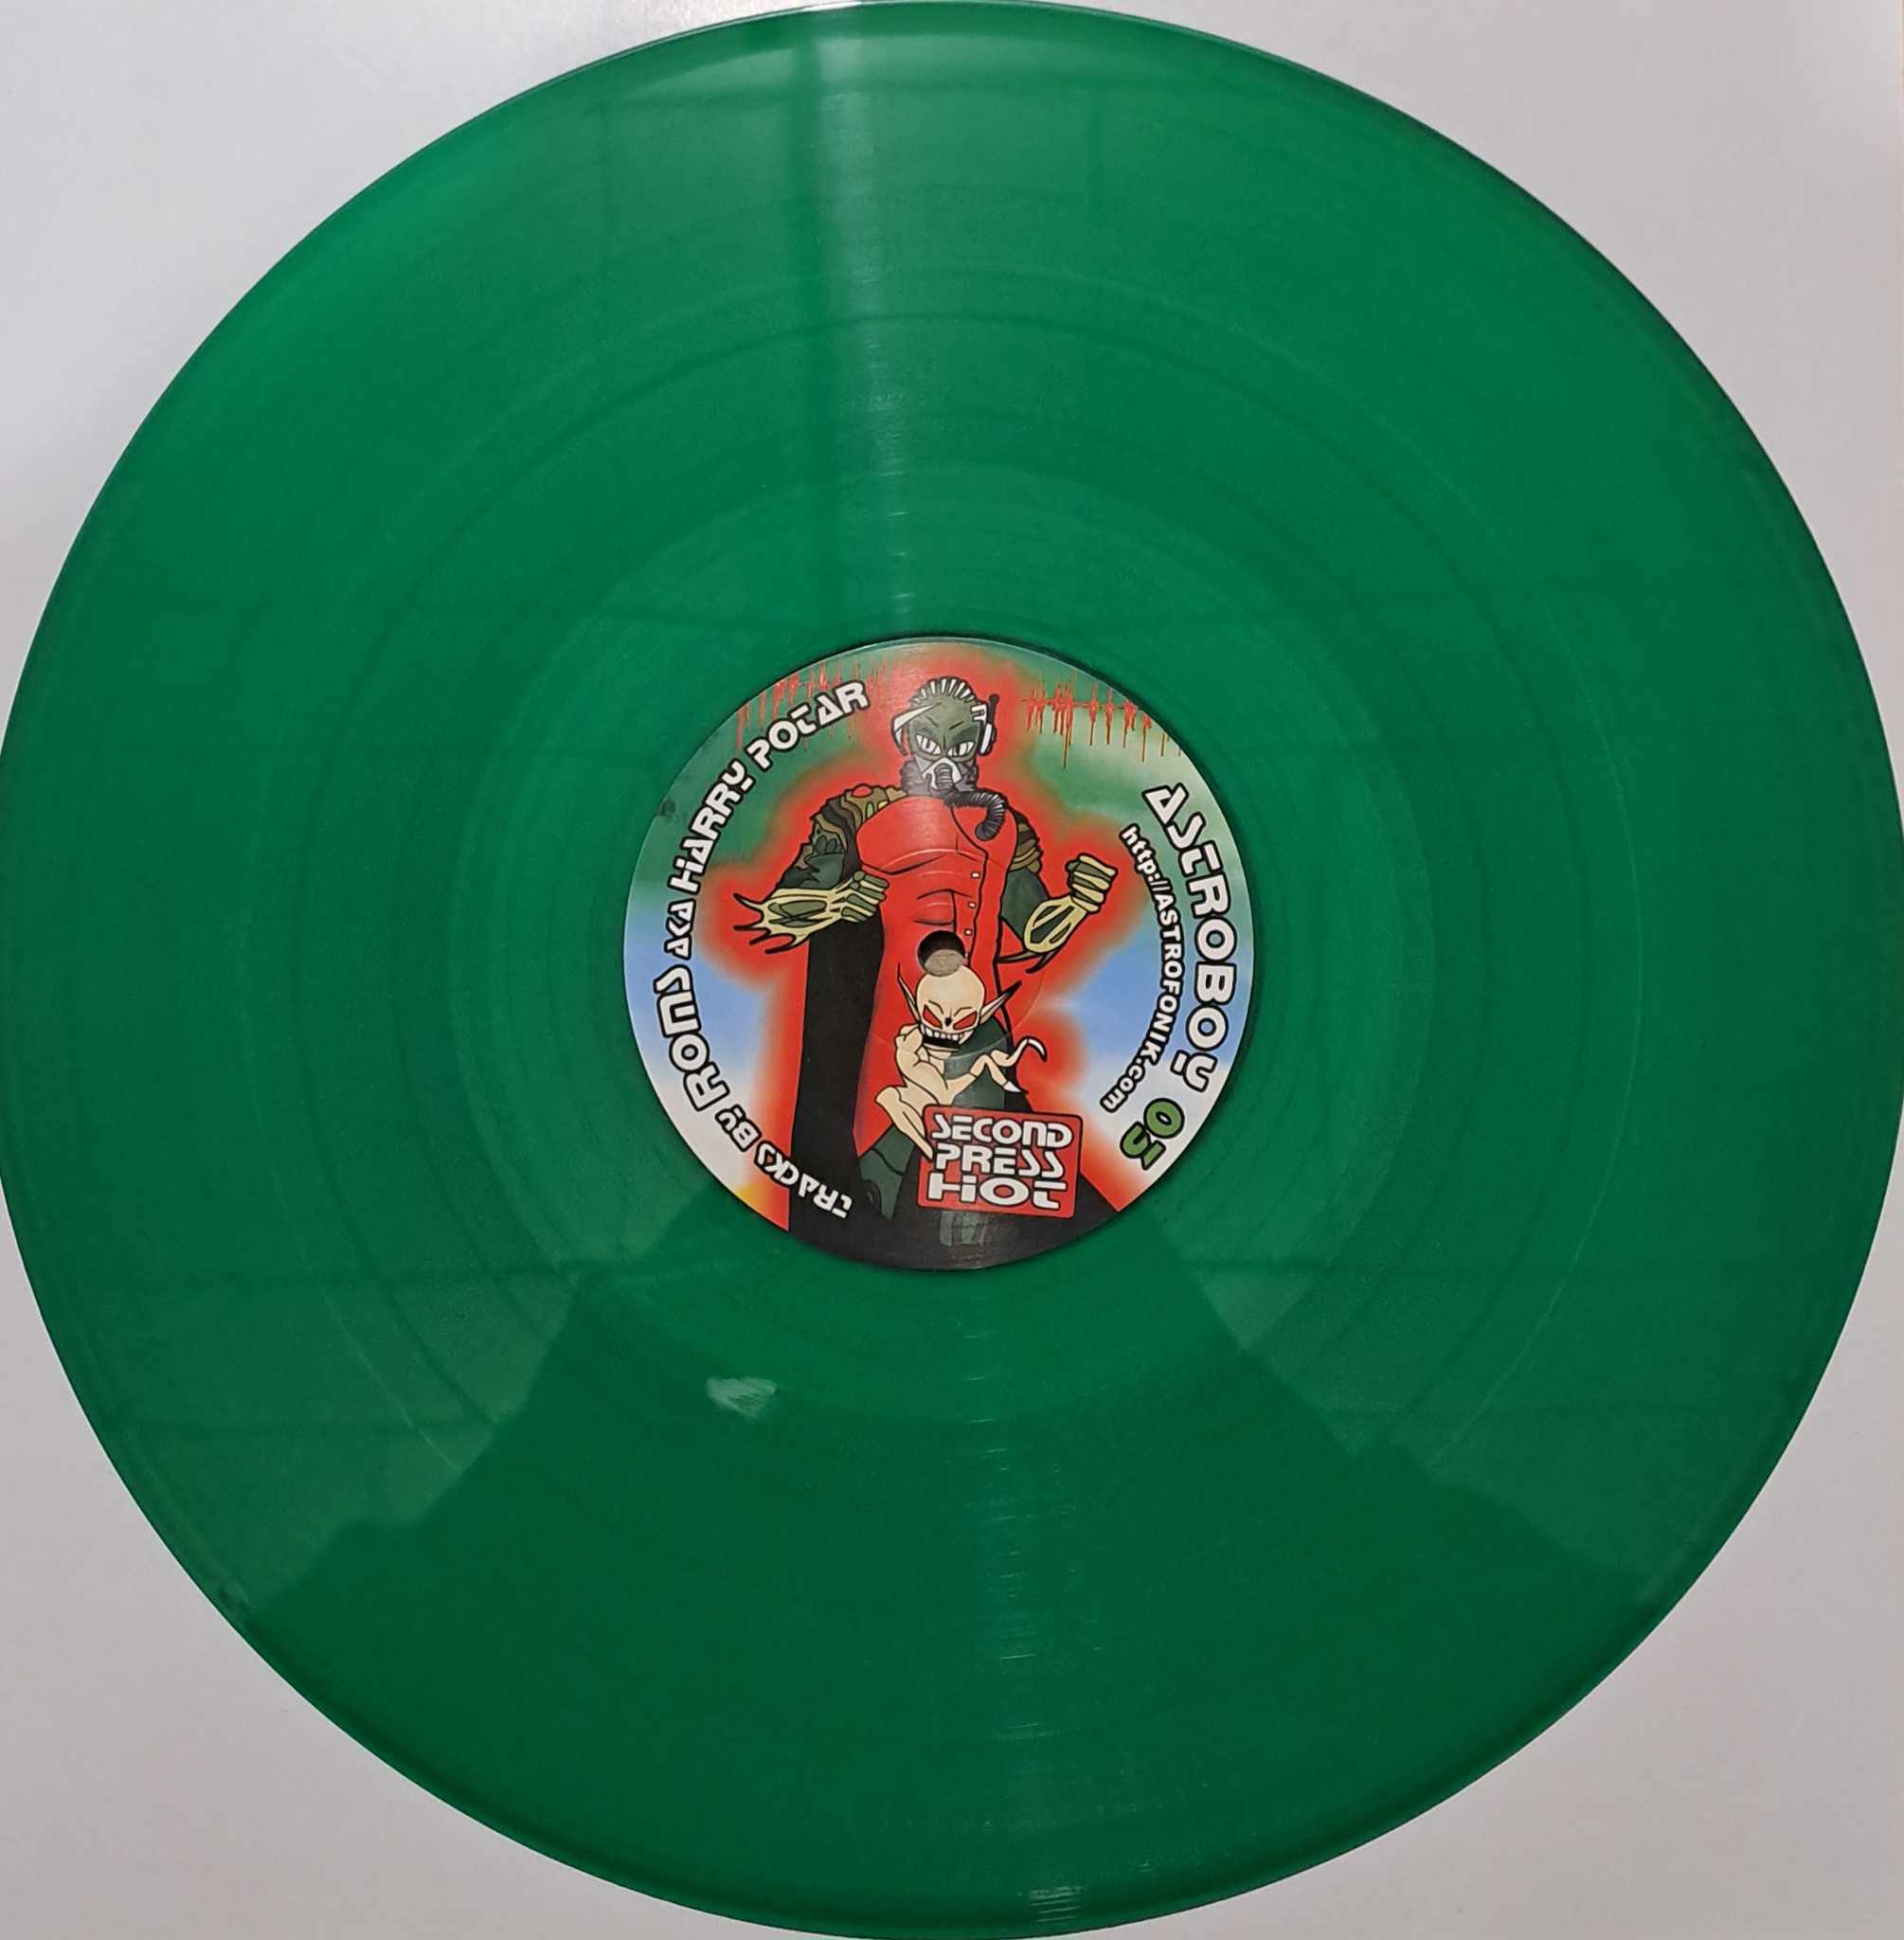 Astroboy 03 - vinyle freetekno